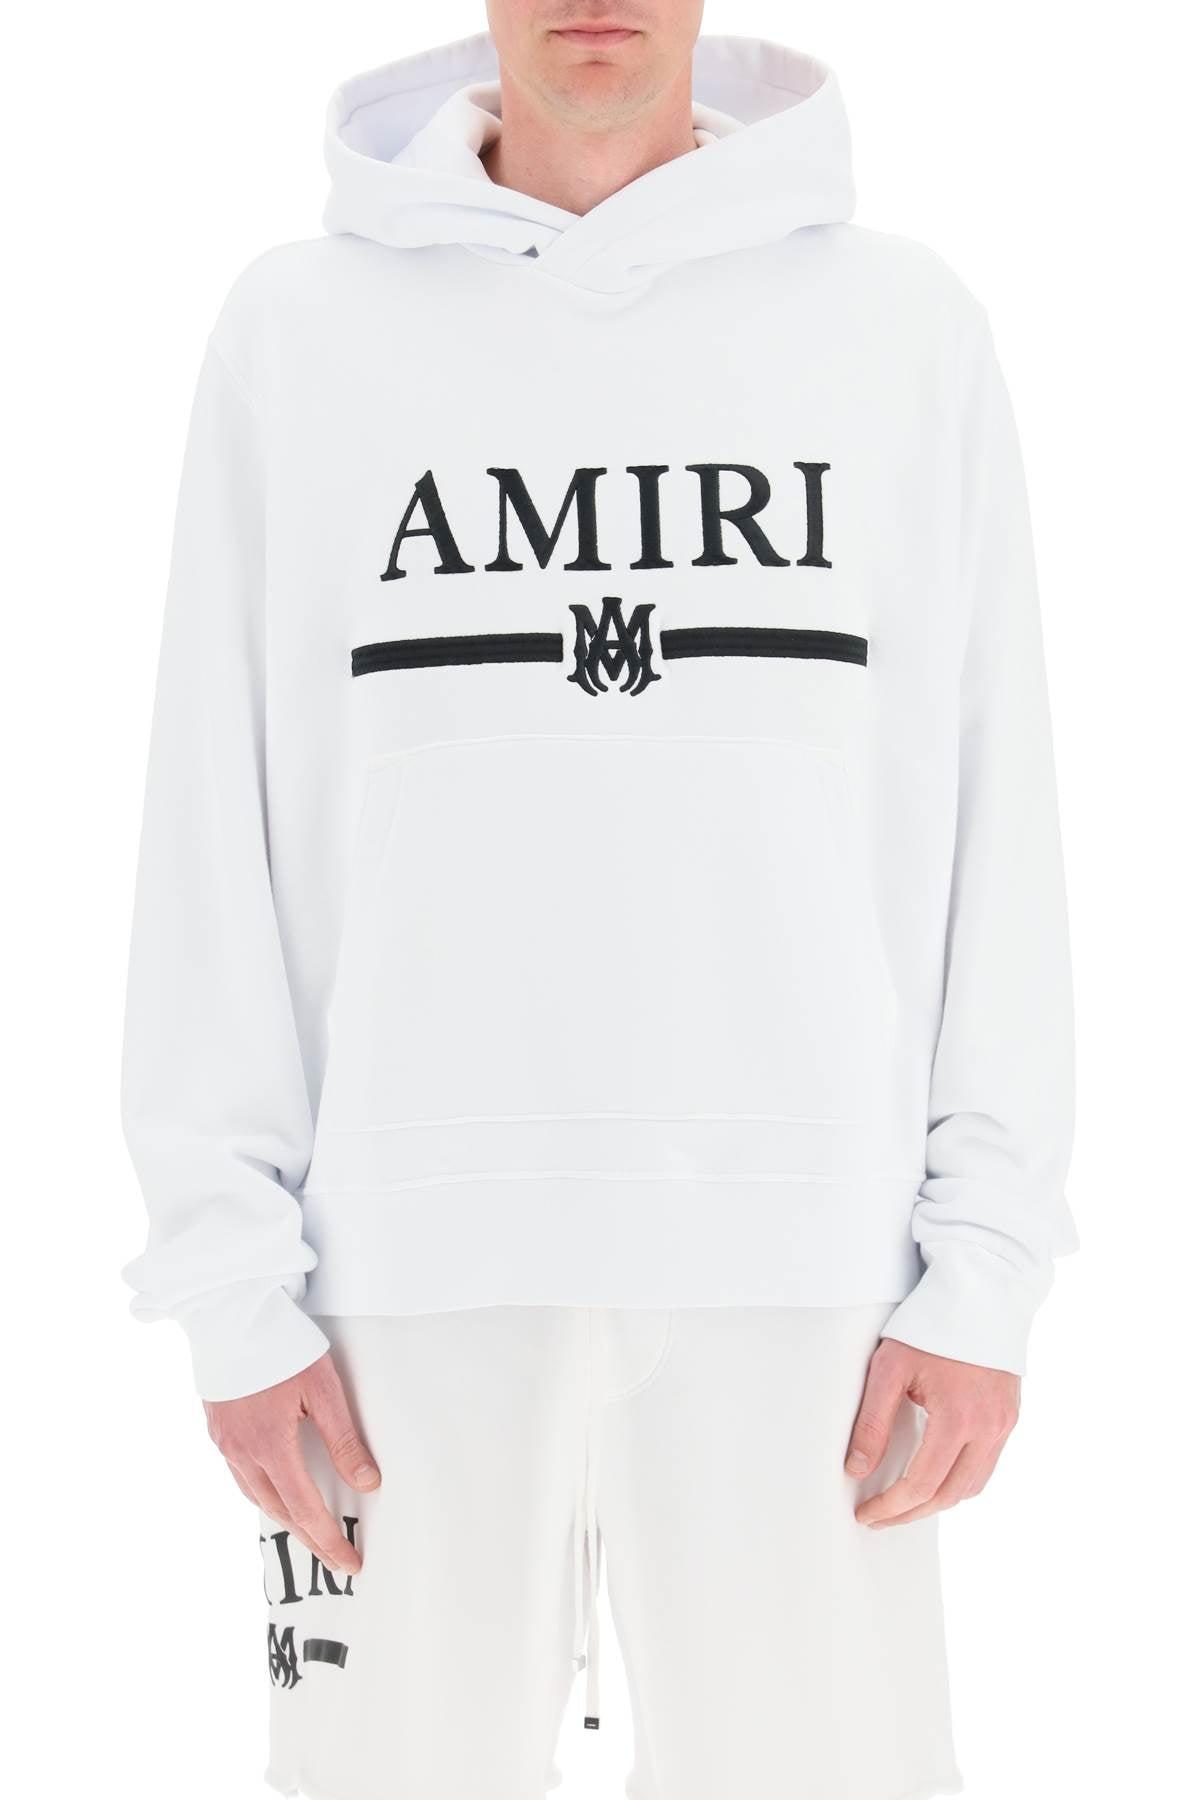 Amiri Core Logo Hoodie in White for Men